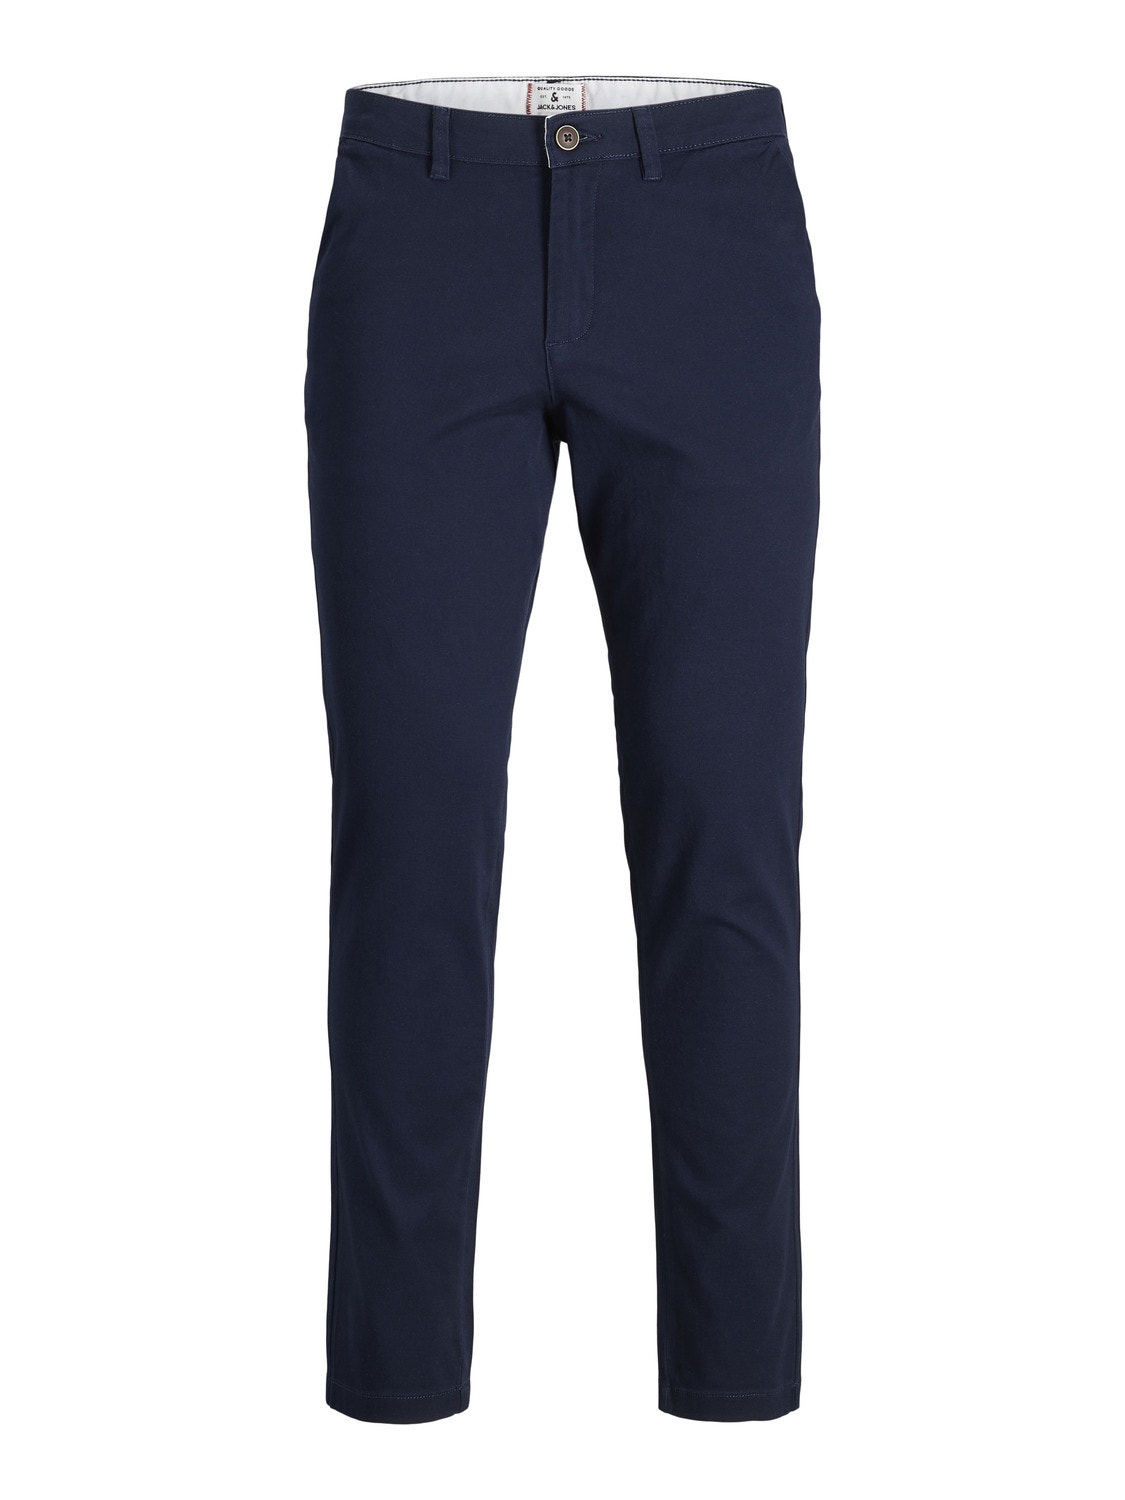 Jack & Jones Plus Size Slim Fit Chino trousers -Navy Blazer - 12243603